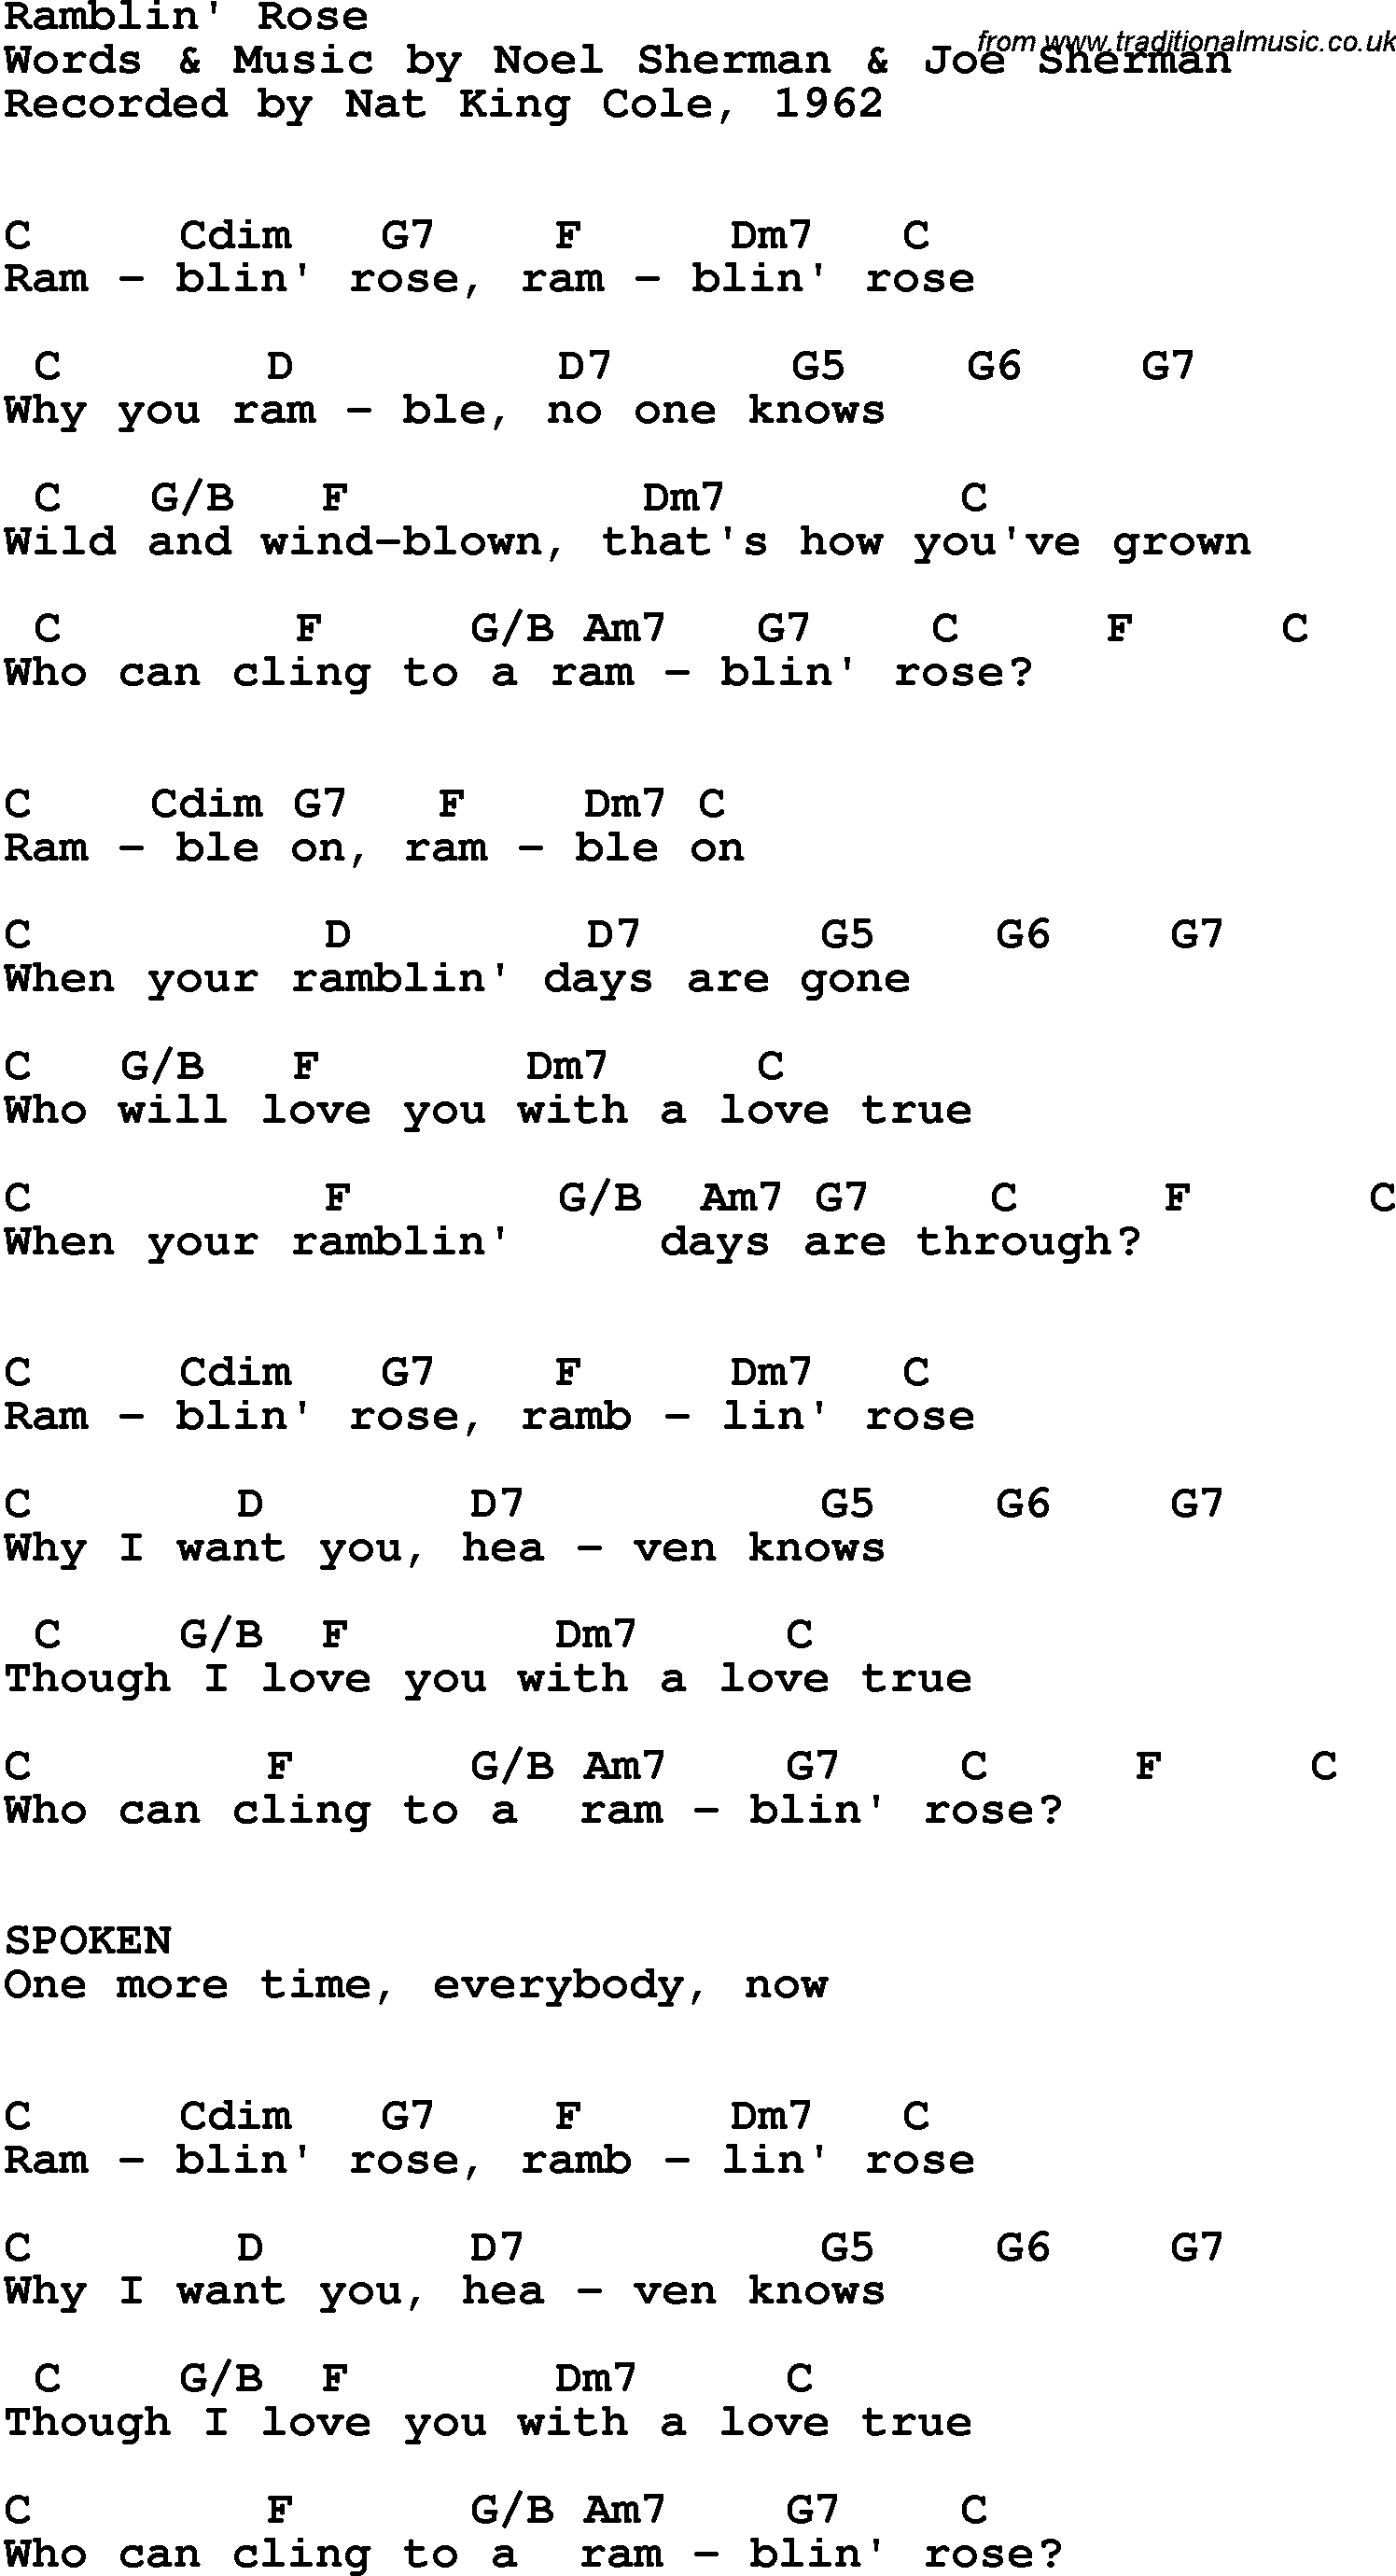 Song Lyrics with guitar chords for Ramblin' Rose - Nat King Cole, 1962